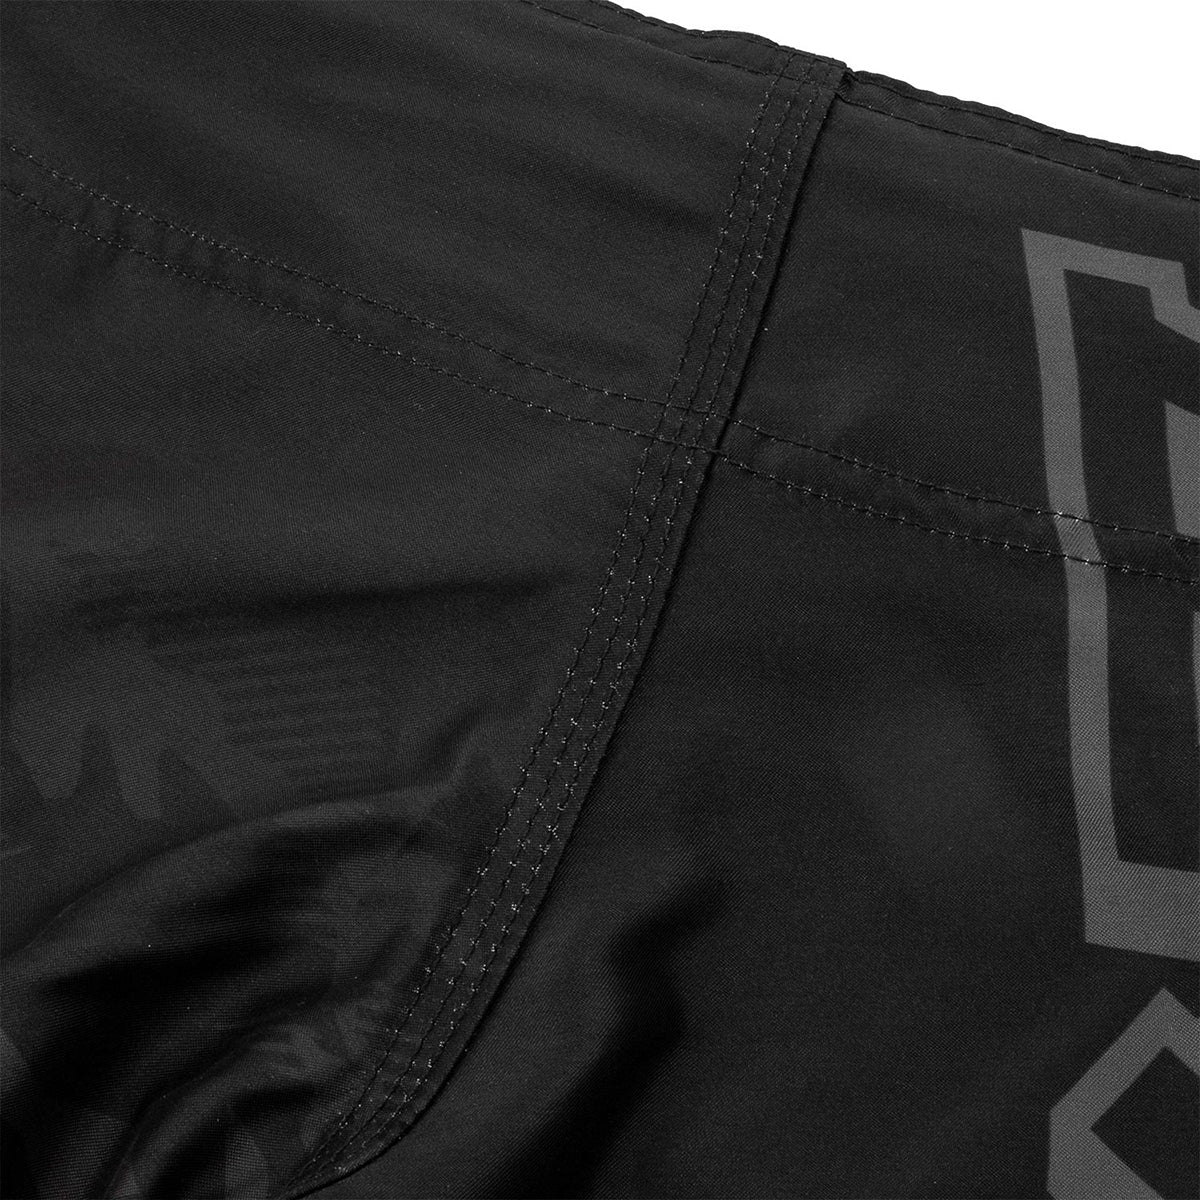 Venum Kids Okinawa 2.0 MMA Fight Shorts  - Black/Yellow Venum